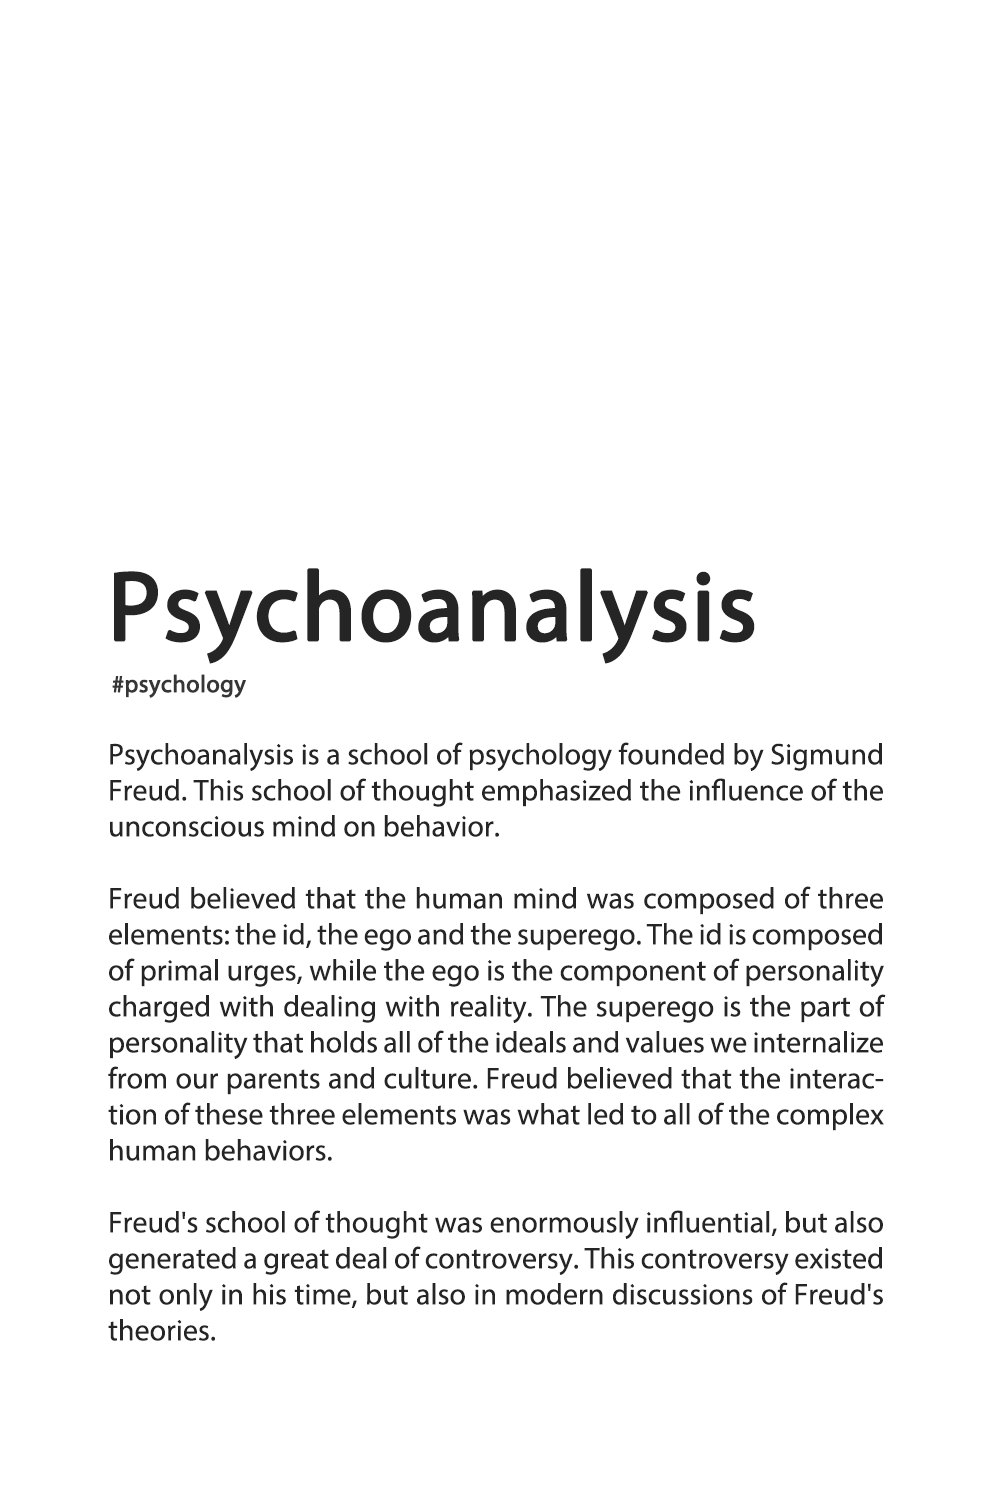 School psychology